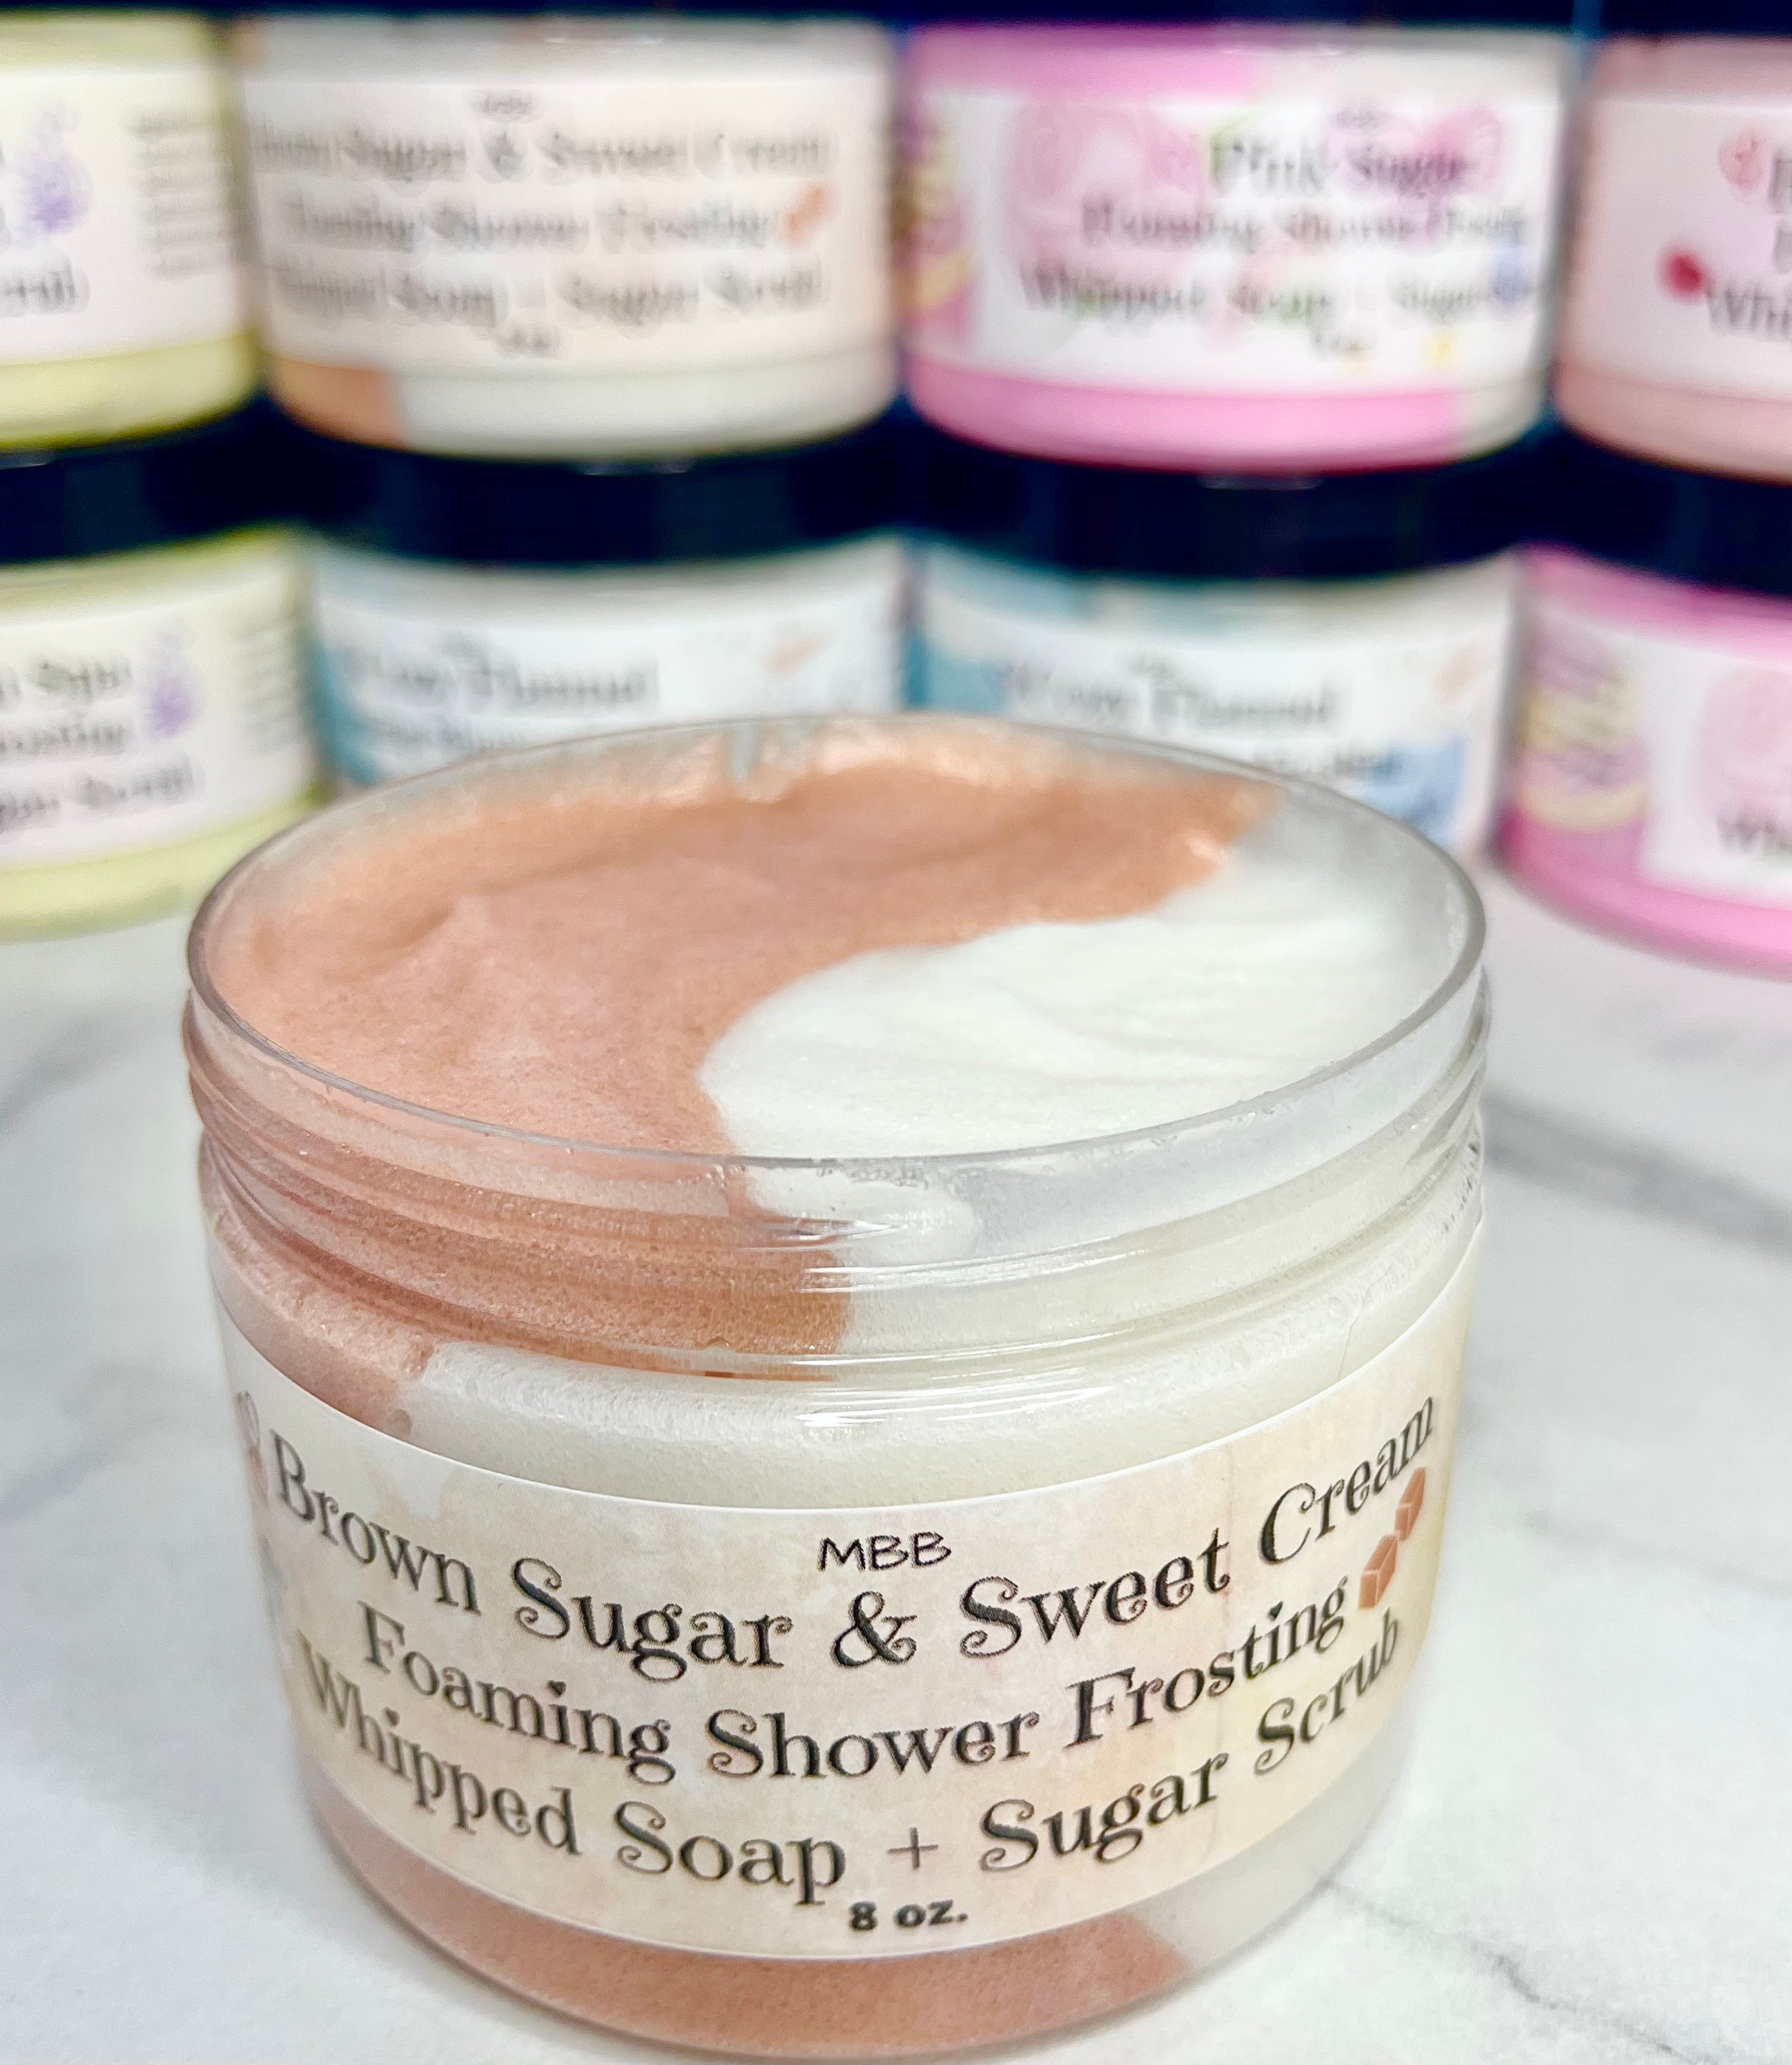 Brown Sugar & Sweet Cream Foaming Shower Frosting | Whipped Soap and Sugar Scrub | Sugar Scrub